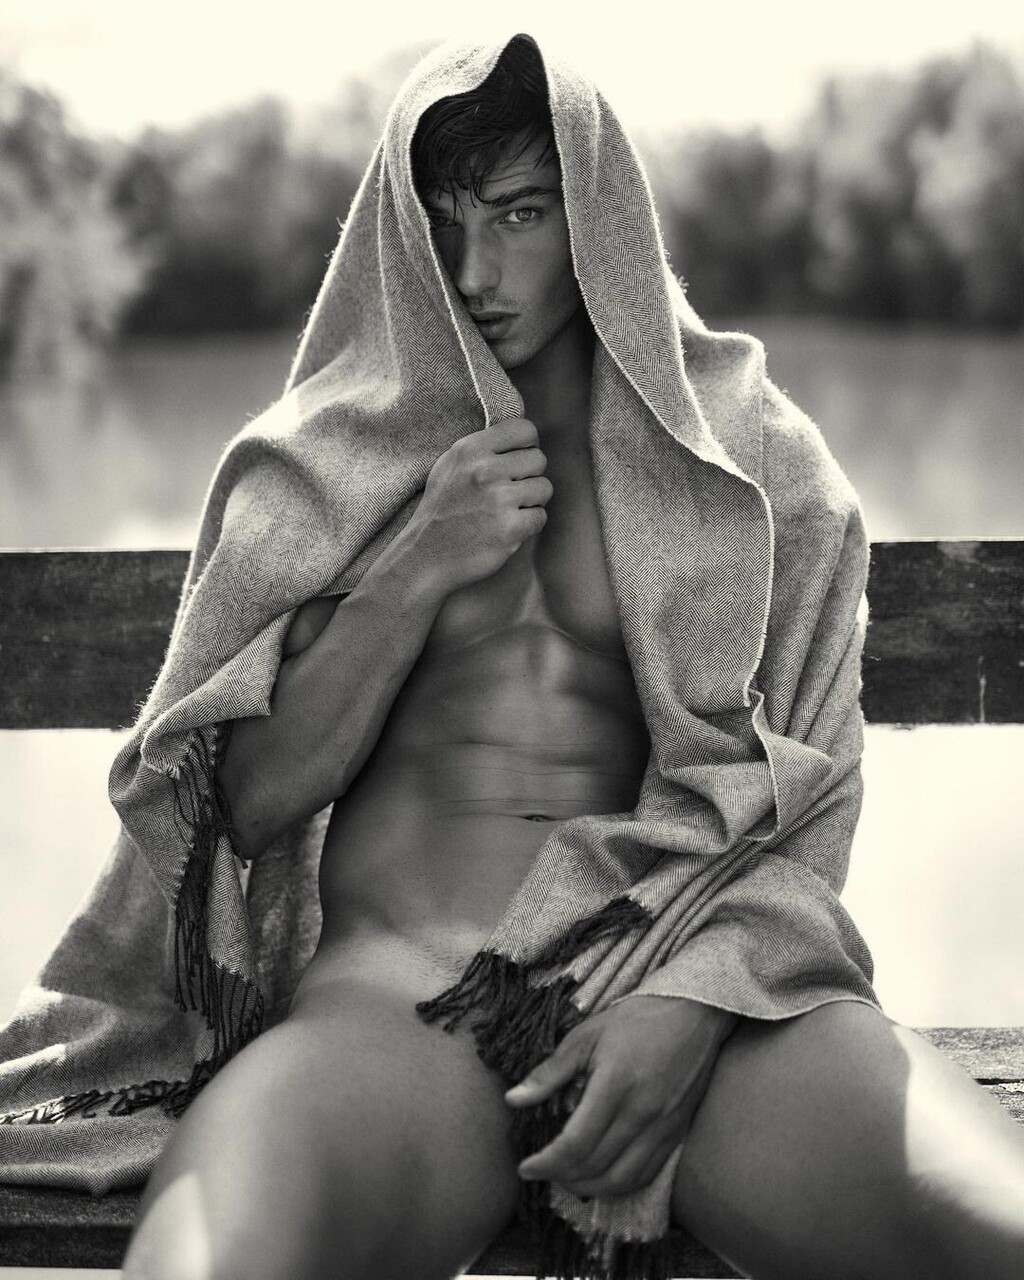 dimitris gekas share nude italian male models photos